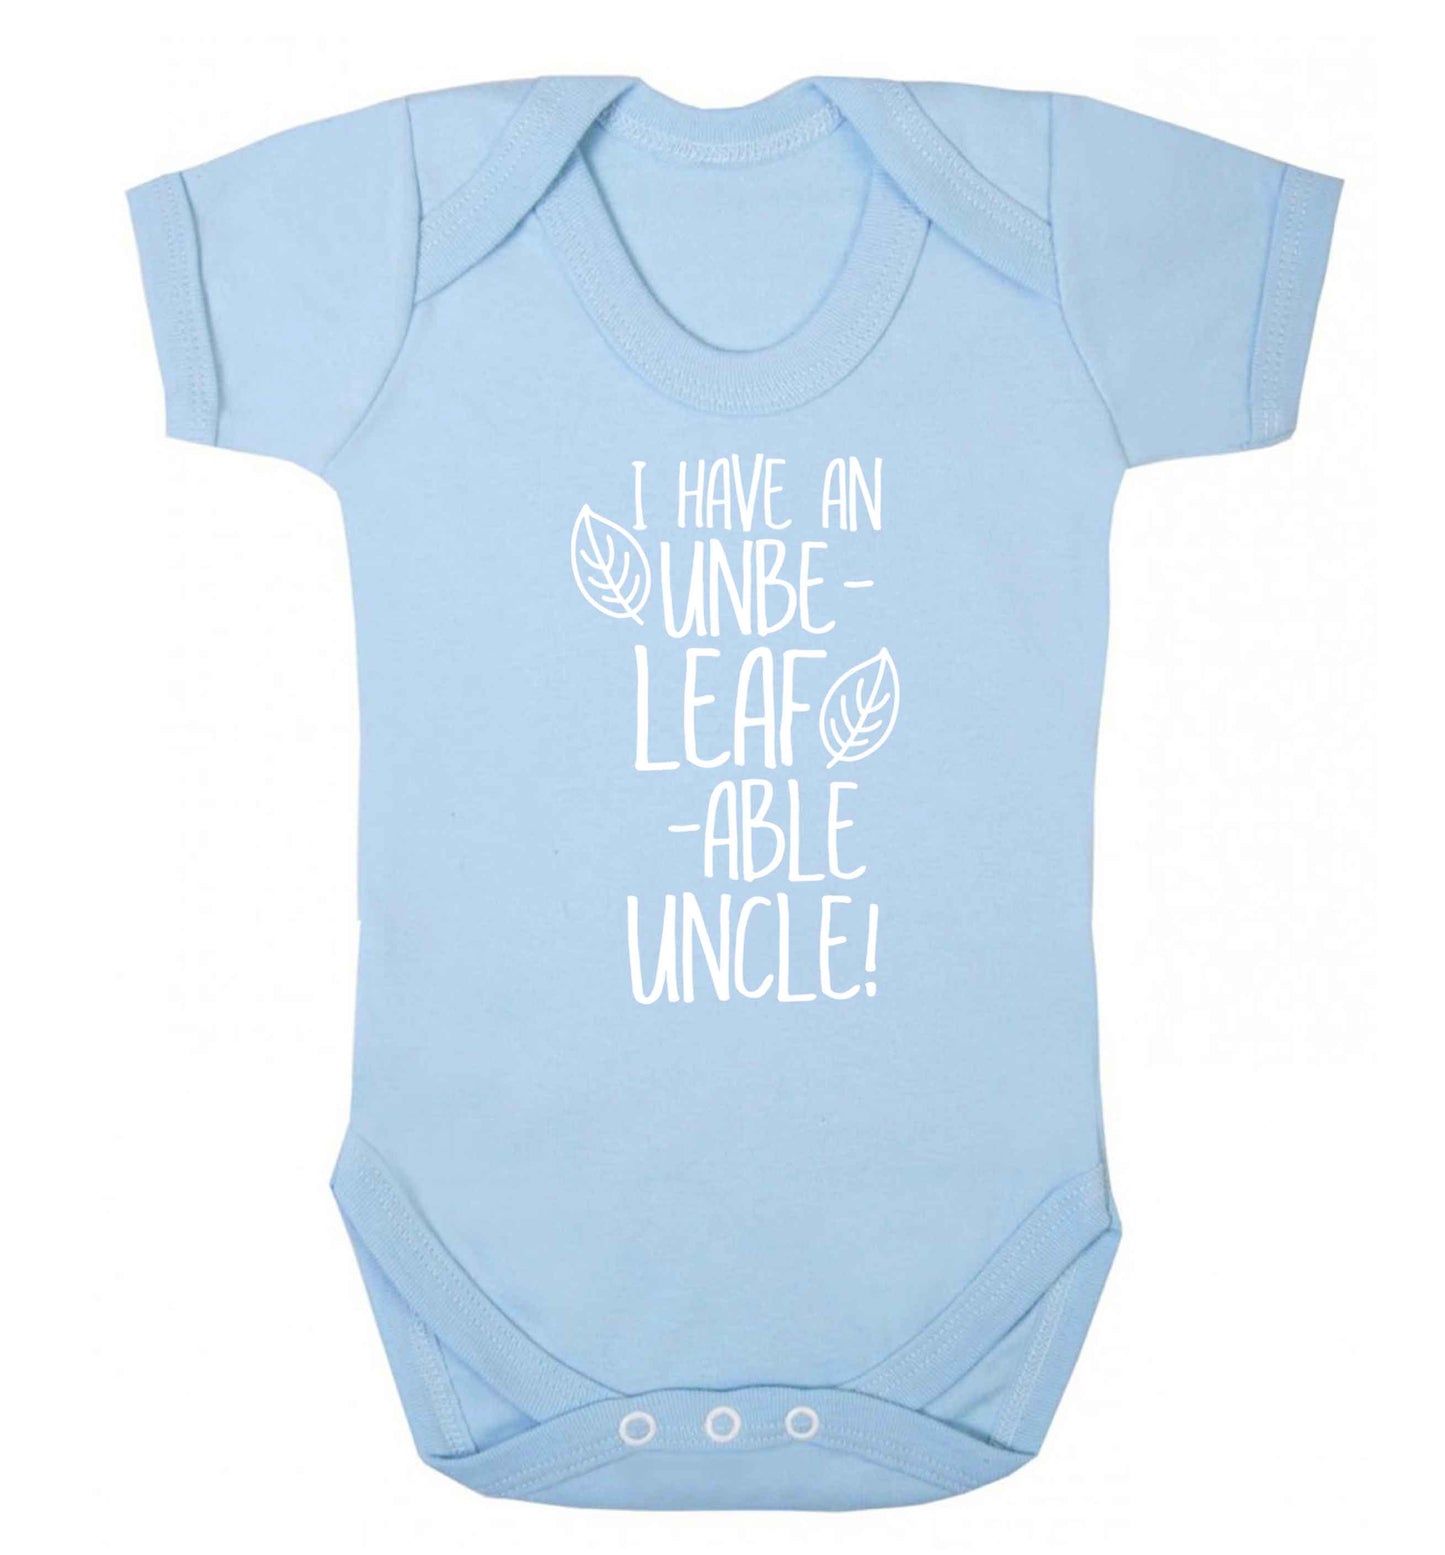 I have an unbe-leaf-able uncle Baby Vest pale blue 18-24 months